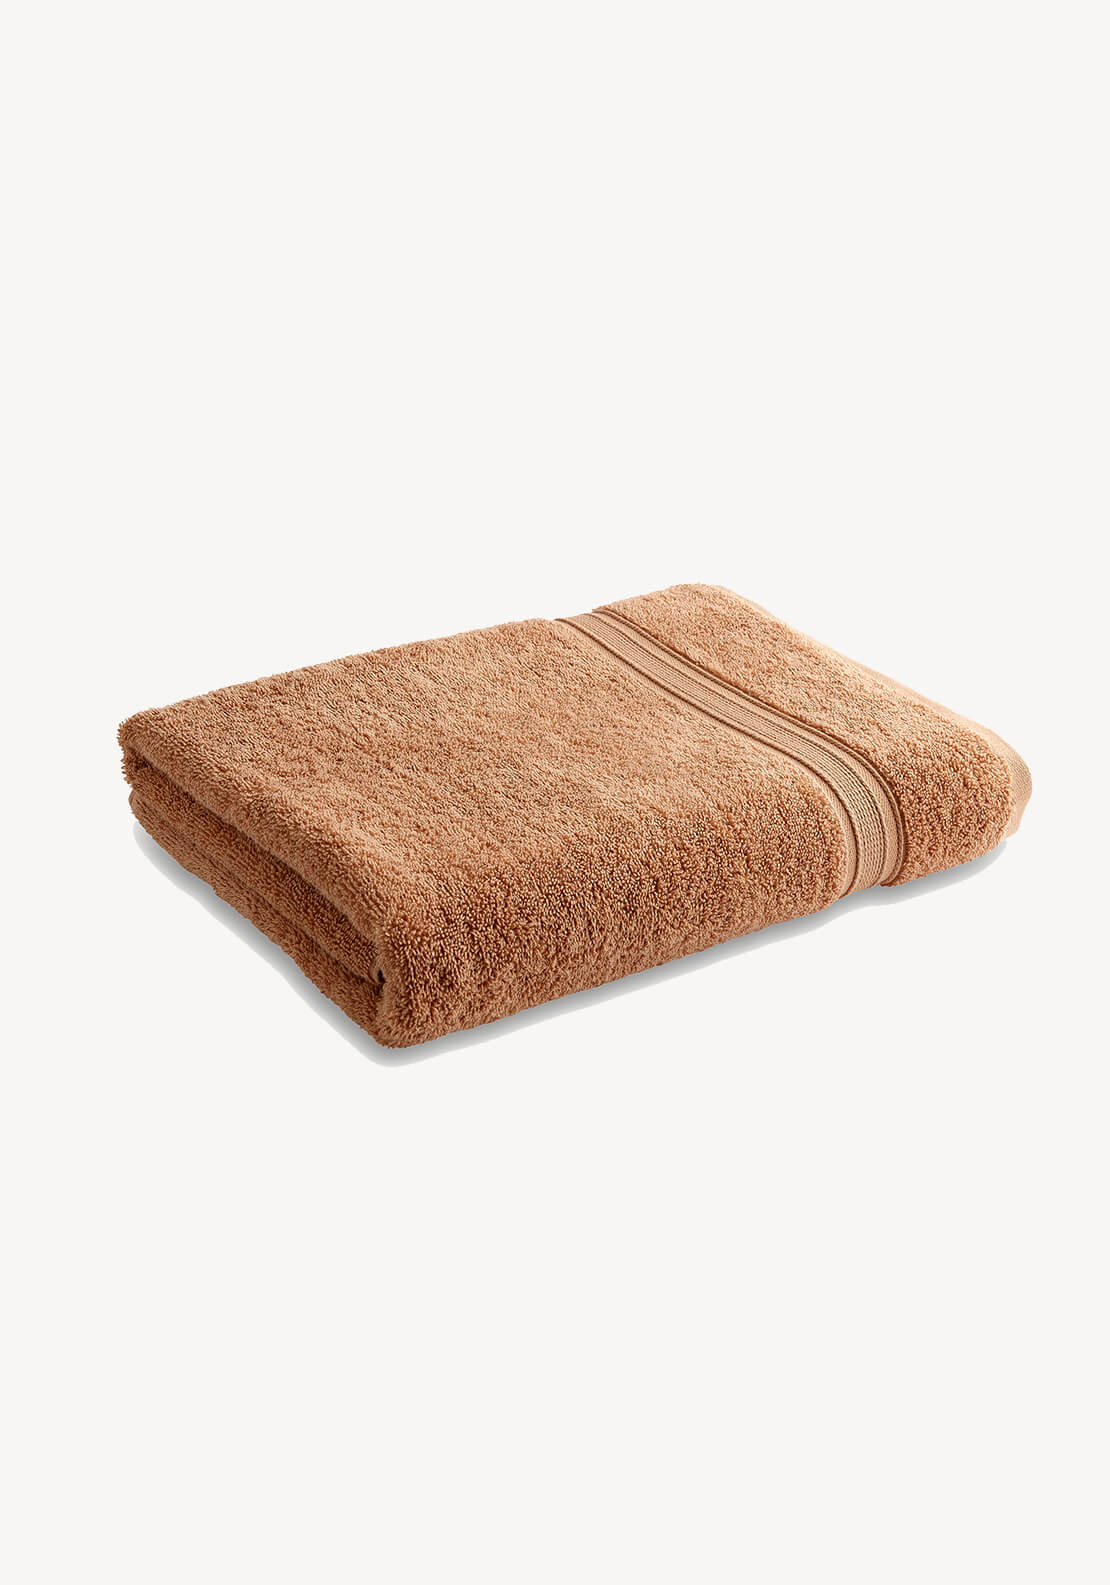 Christy Serene Bath Towel - Chai Latte 1 Shaws Department Stores